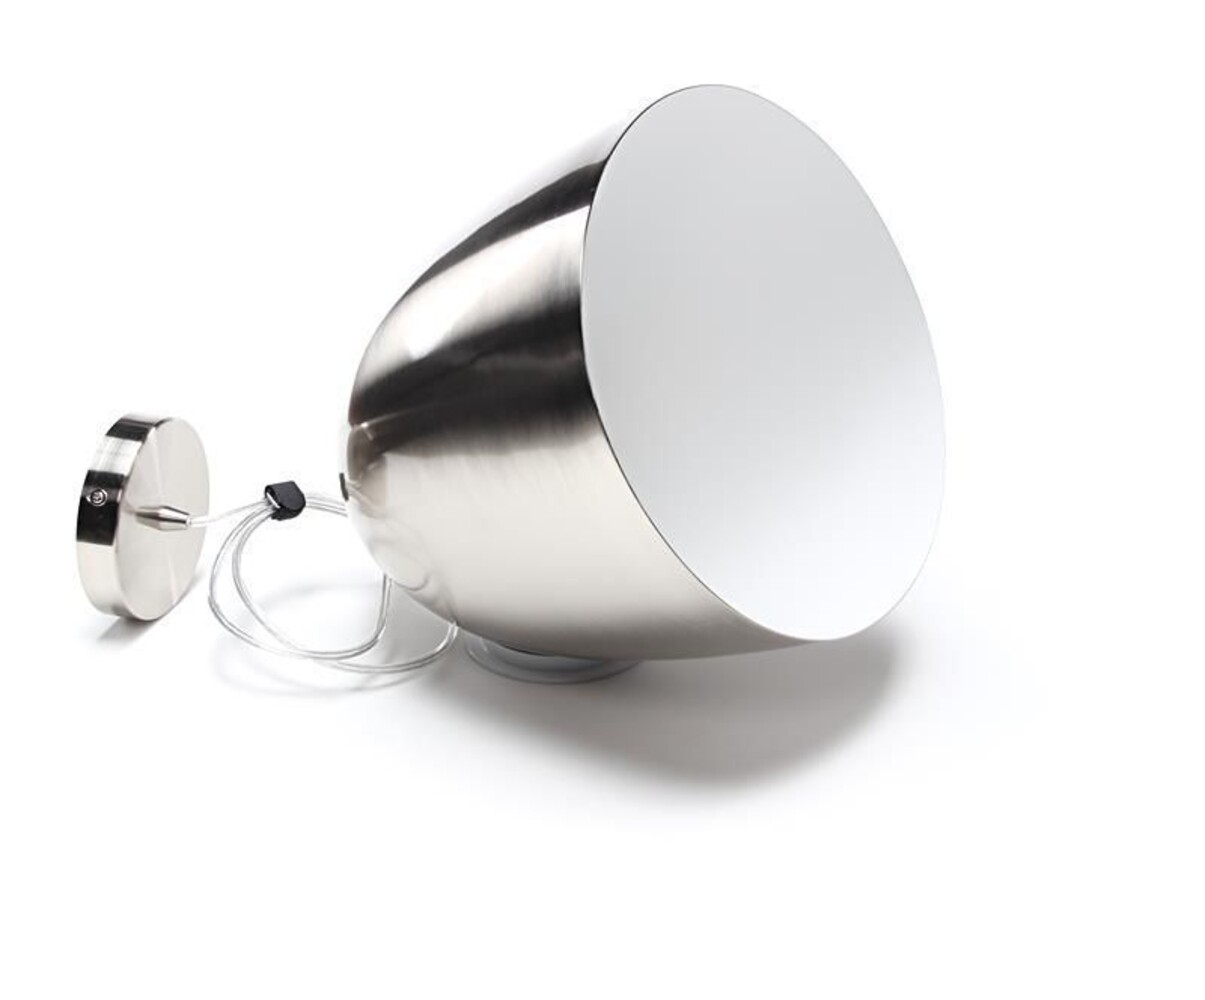 Deko-Light Pendelleuchte Bell von LED Universum, stilvolles und elegantes Design, 220-240V AC 50-60Hz, E27, 1x max 40.00 W